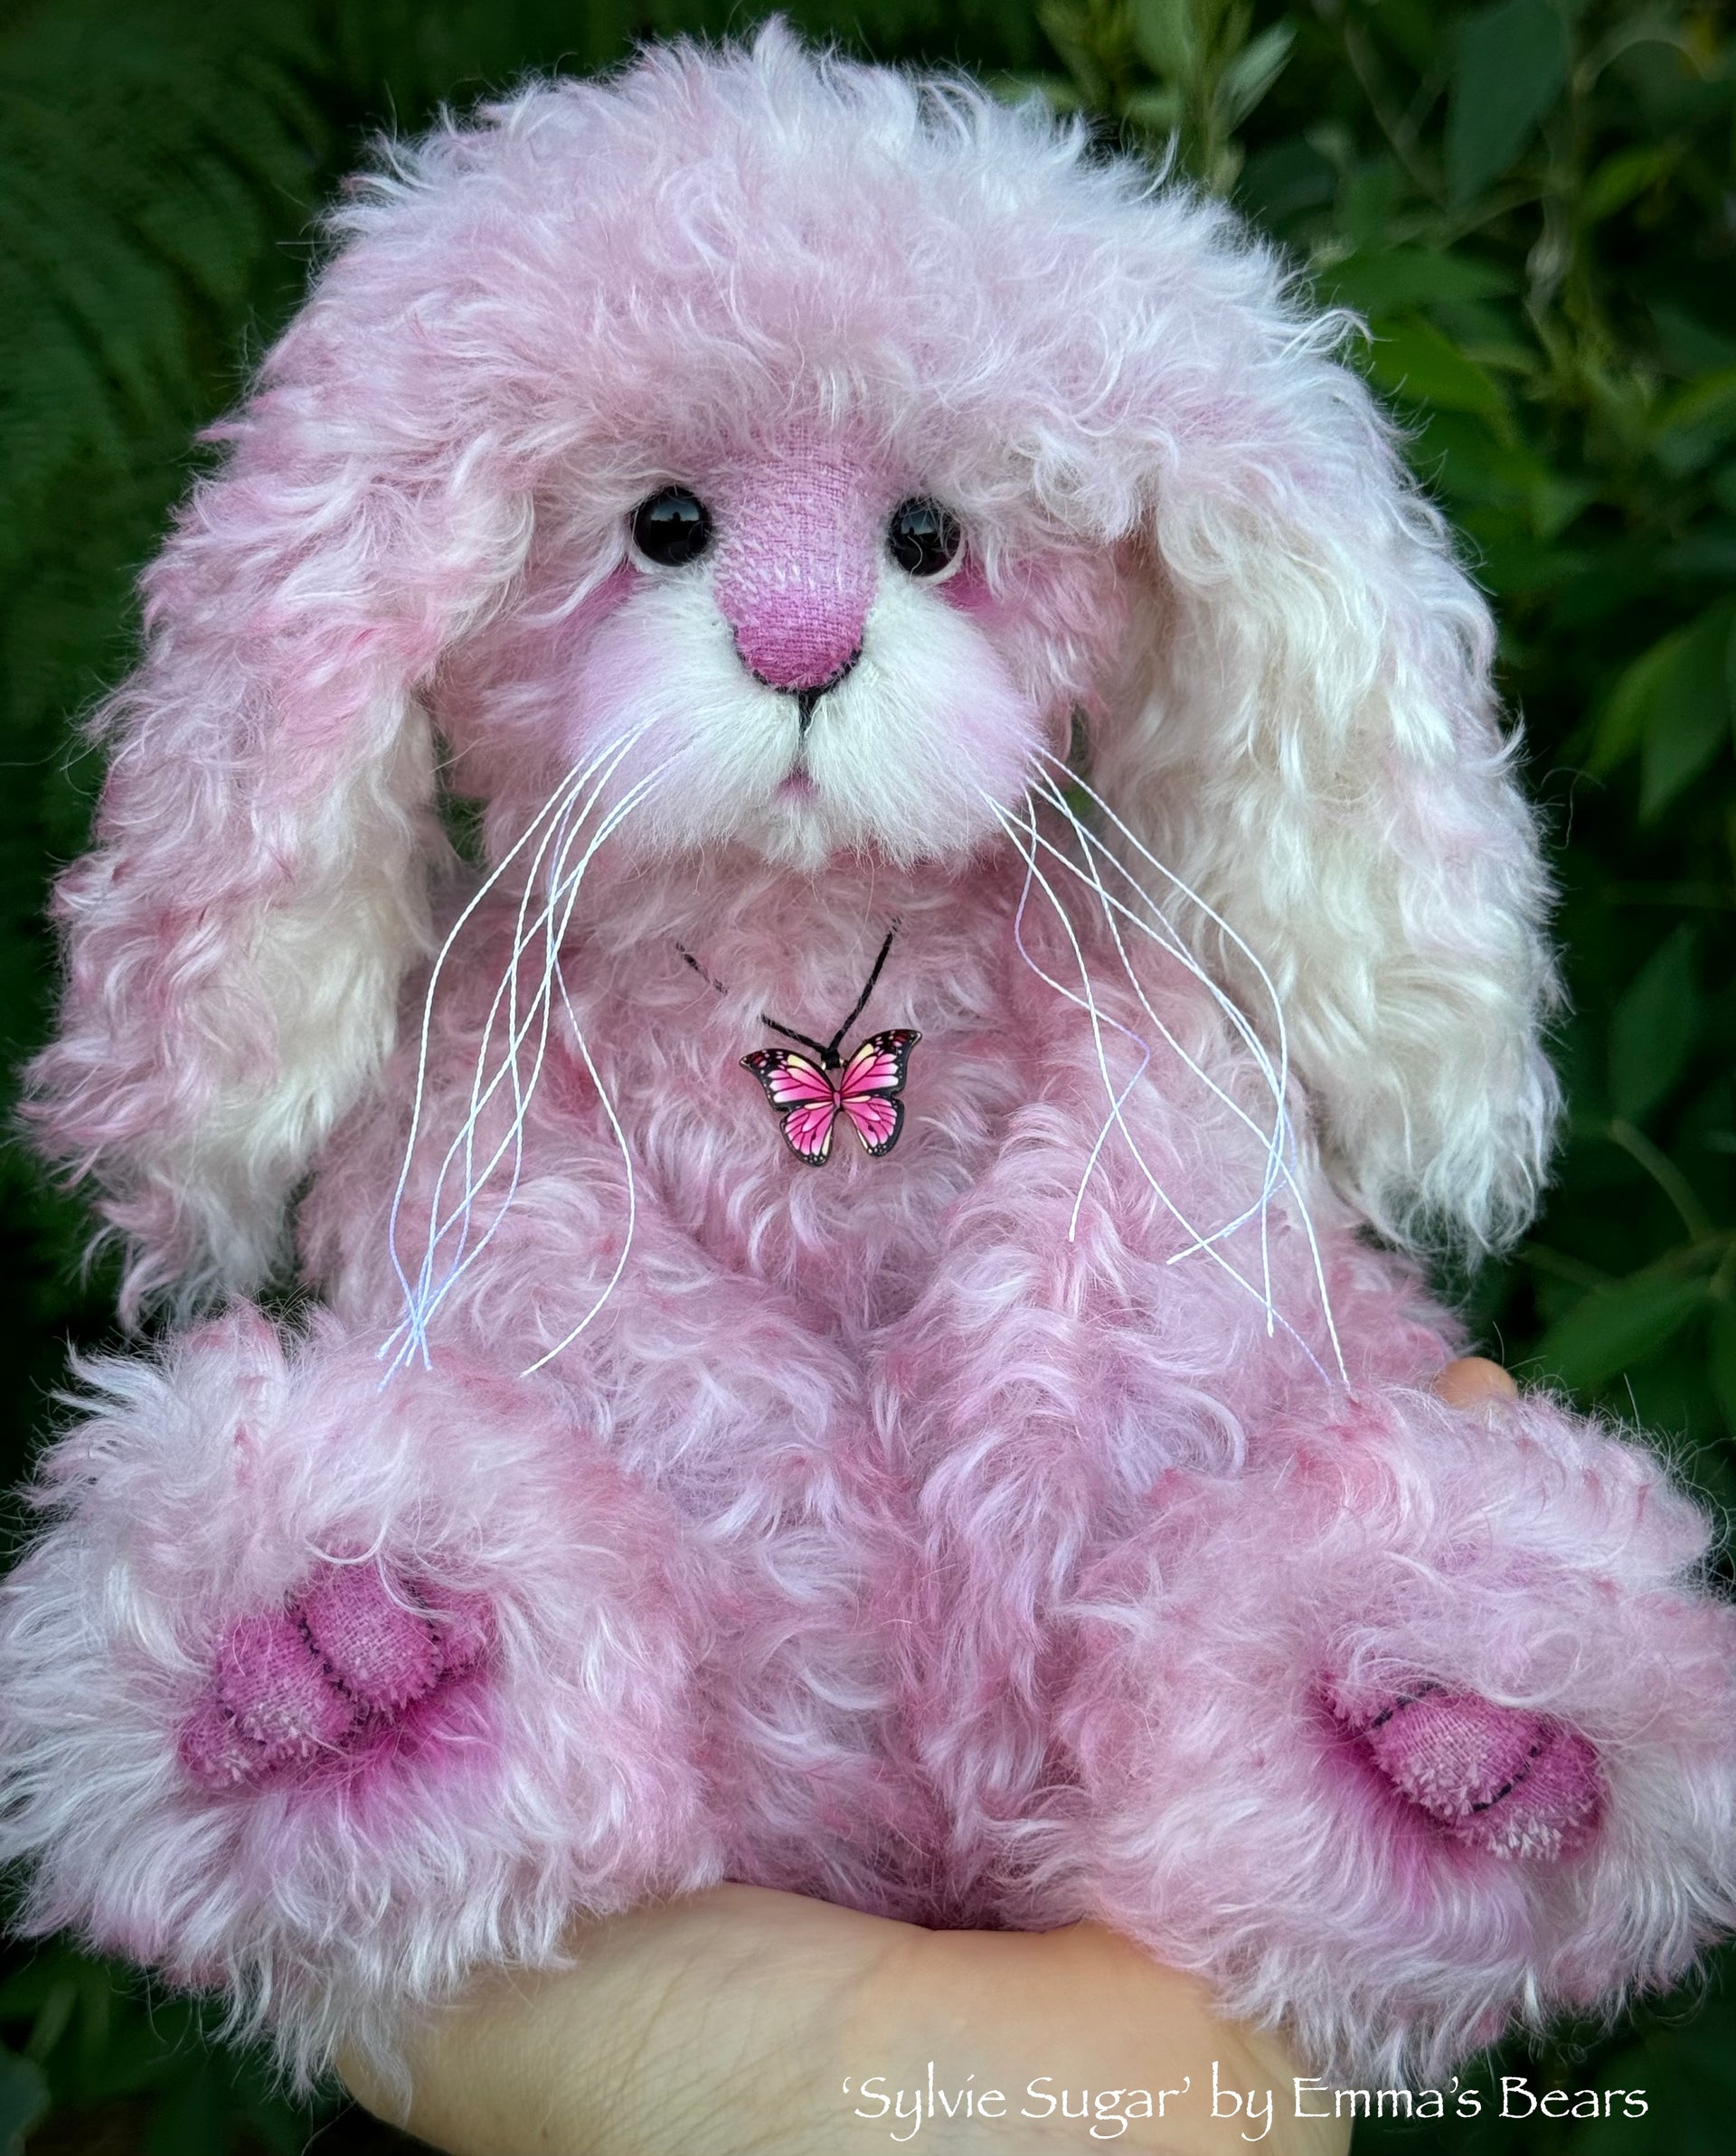 Sylvie Sugar - 12" Hand-Dyed Kid Mohair EASTER Bunny by Emma's Bears - OOAK